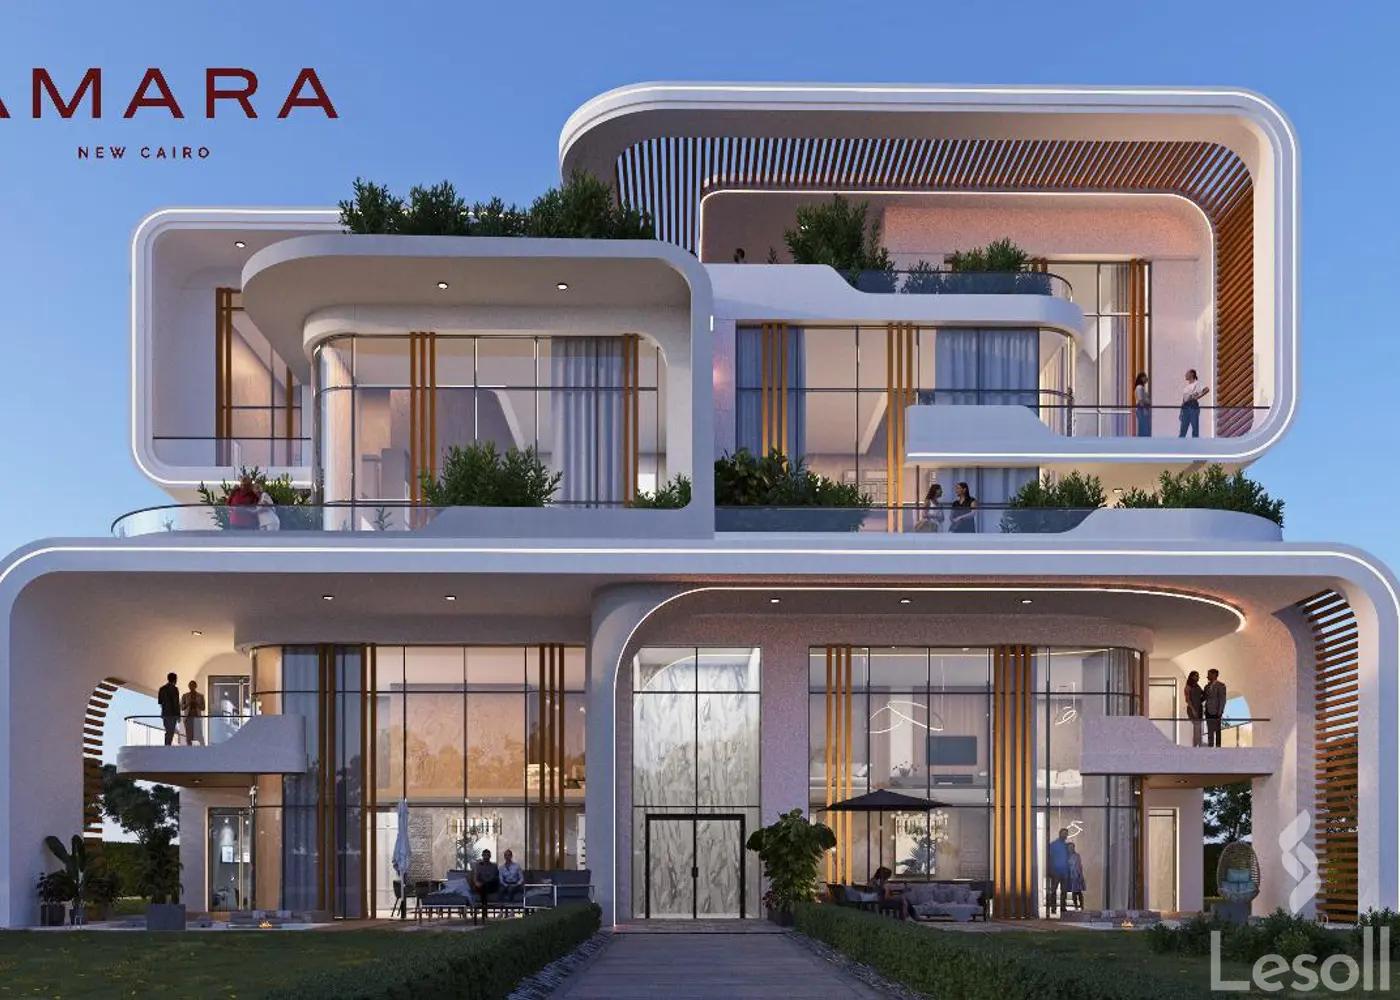  دوبلكس للبيع Alto Casa fully finished in new Cairo (Amara compound new Cairo)